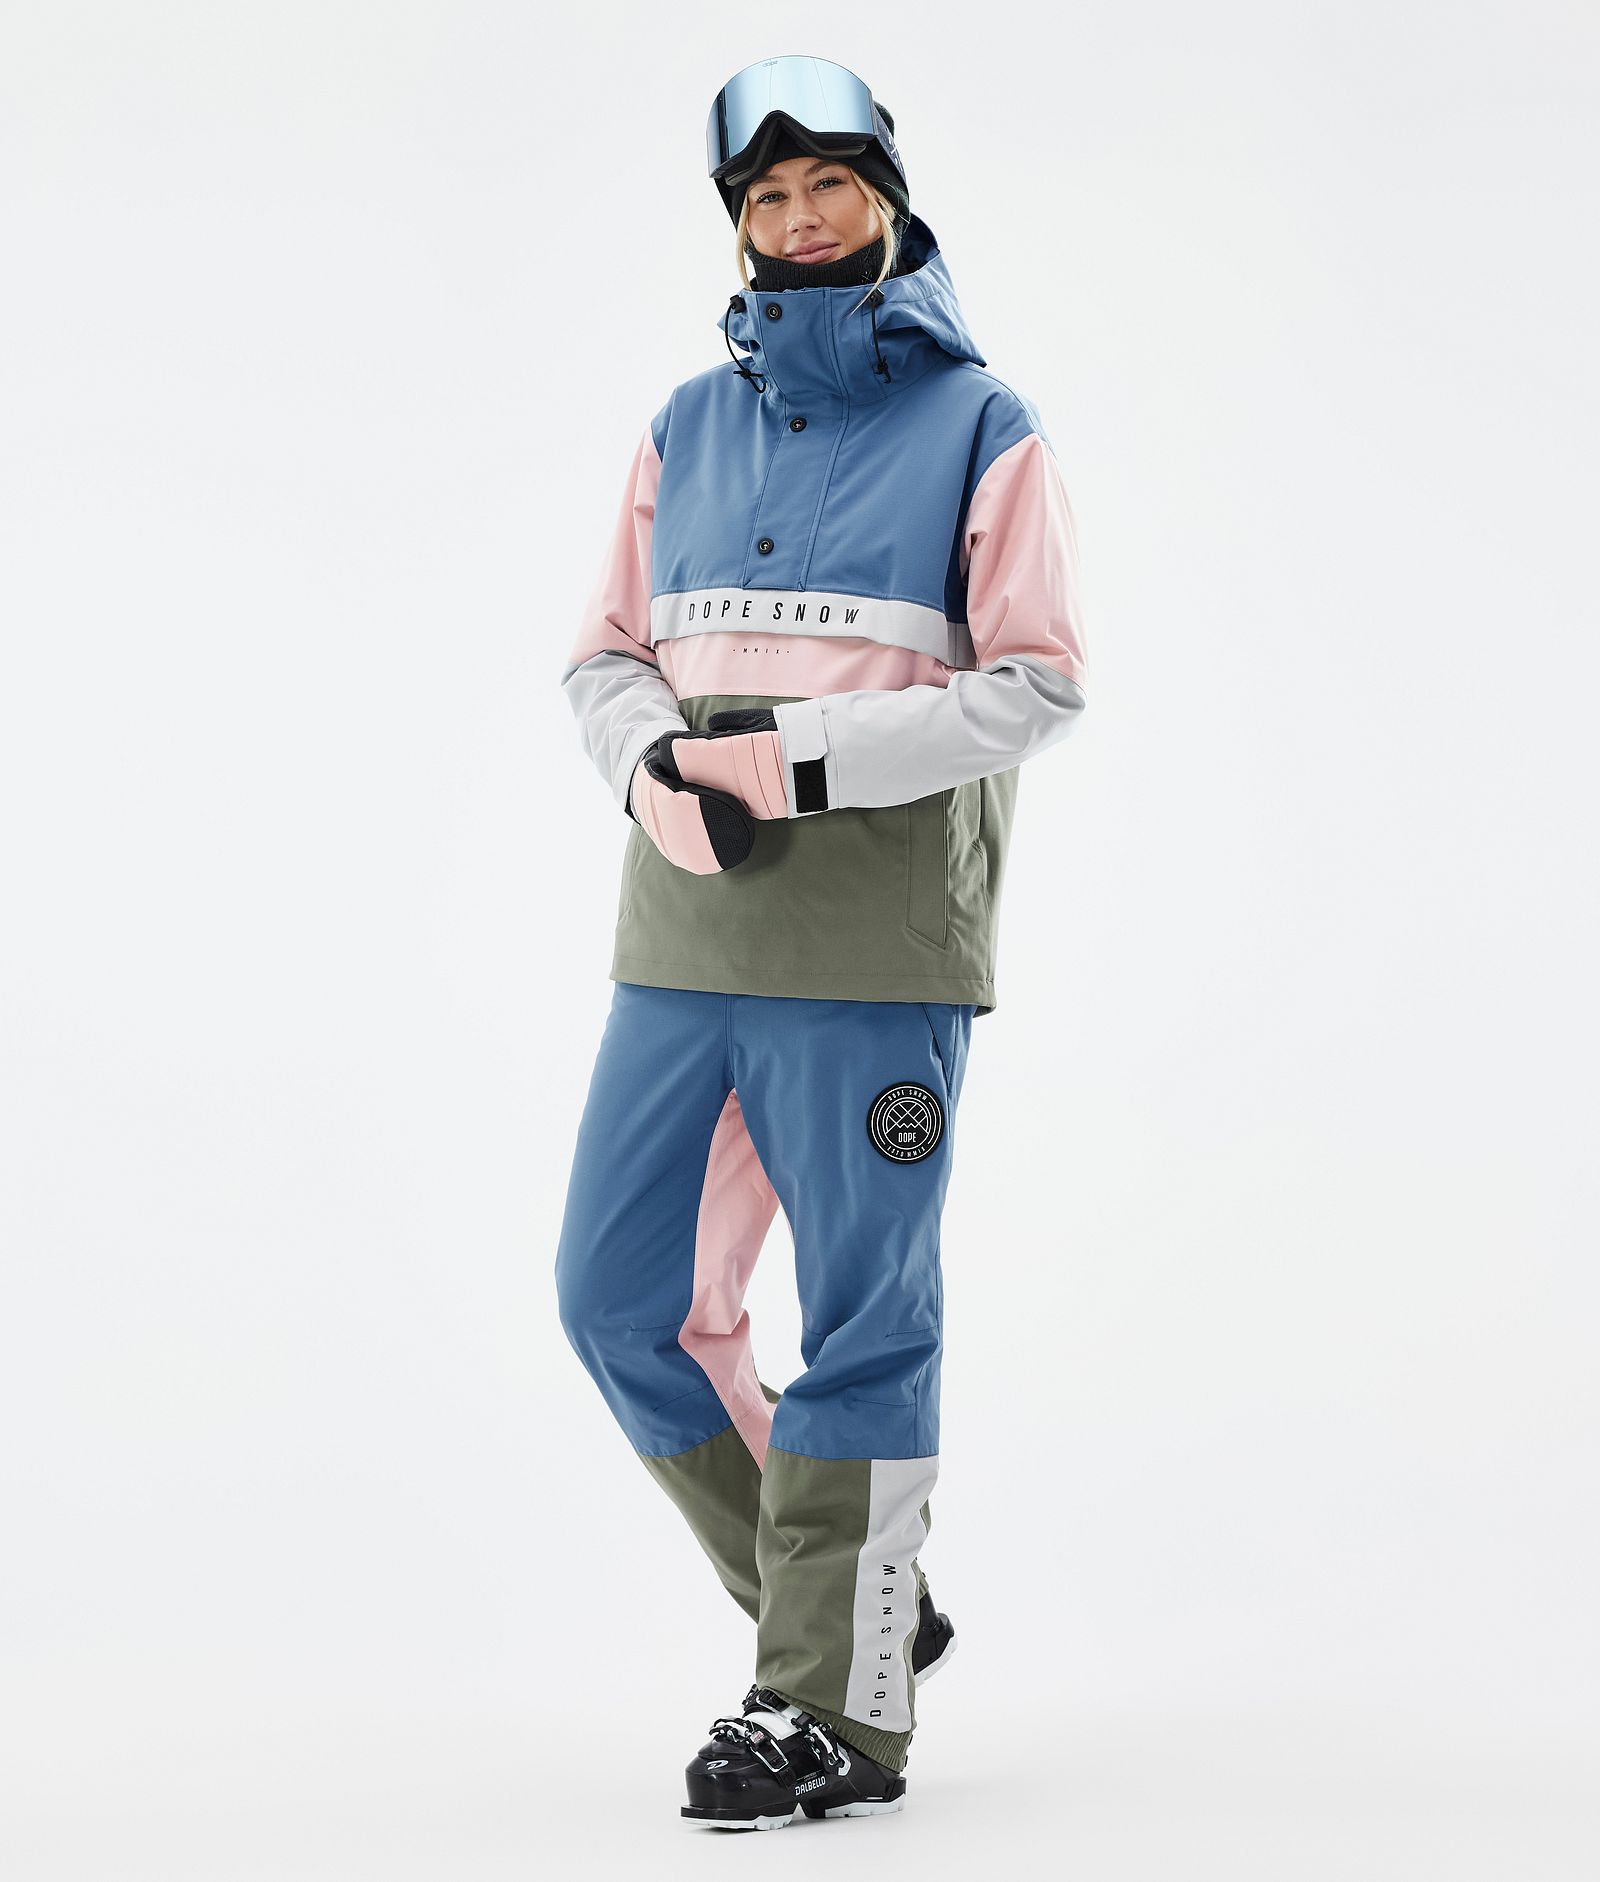 Dope Blizzard Track W Pantalones Esquí Mujer Blue Steel/Light Grey/Soft Pink/Greenish